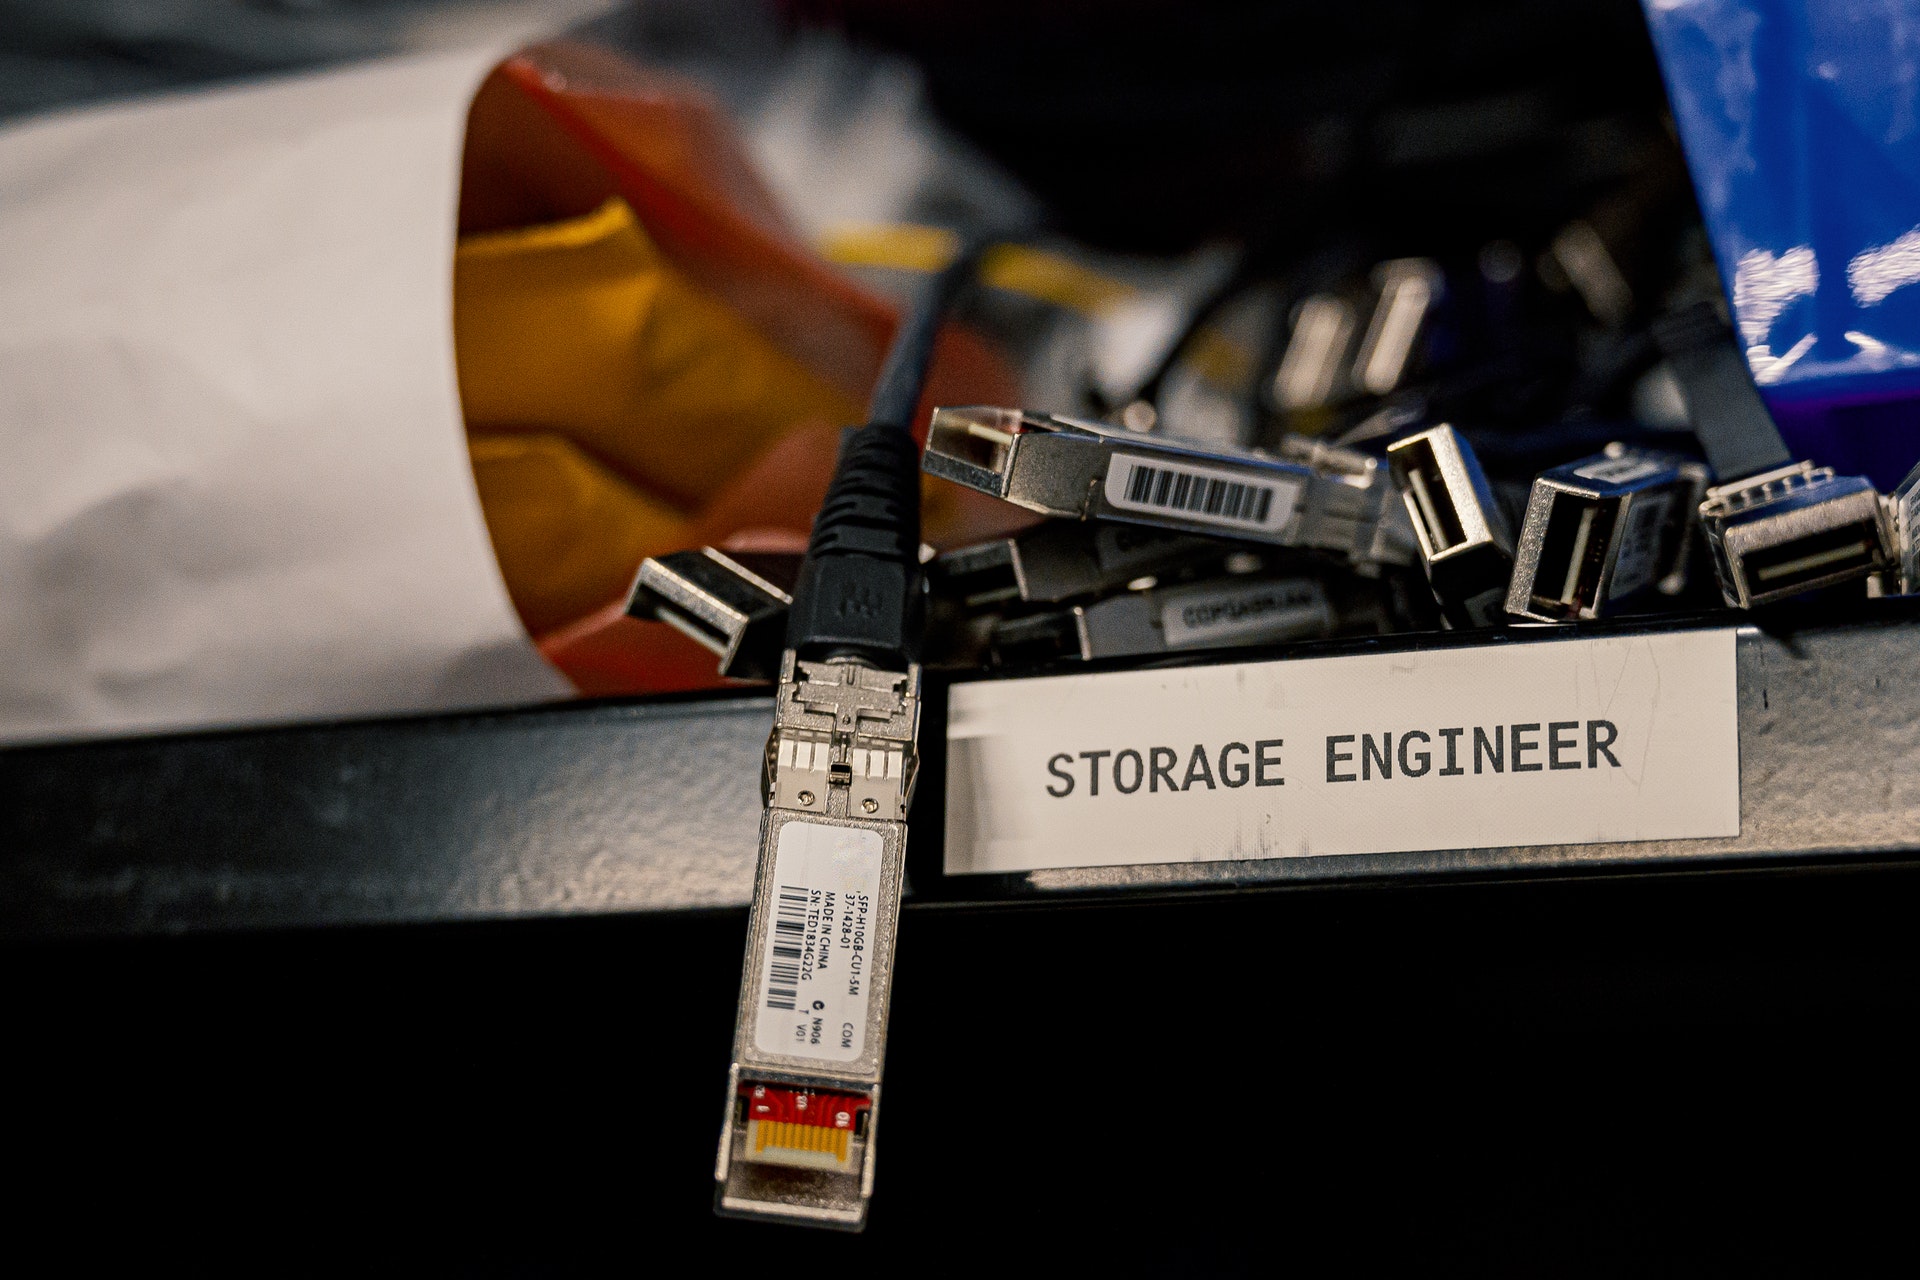 Shelf storage devices labeled "Storage Engineer"